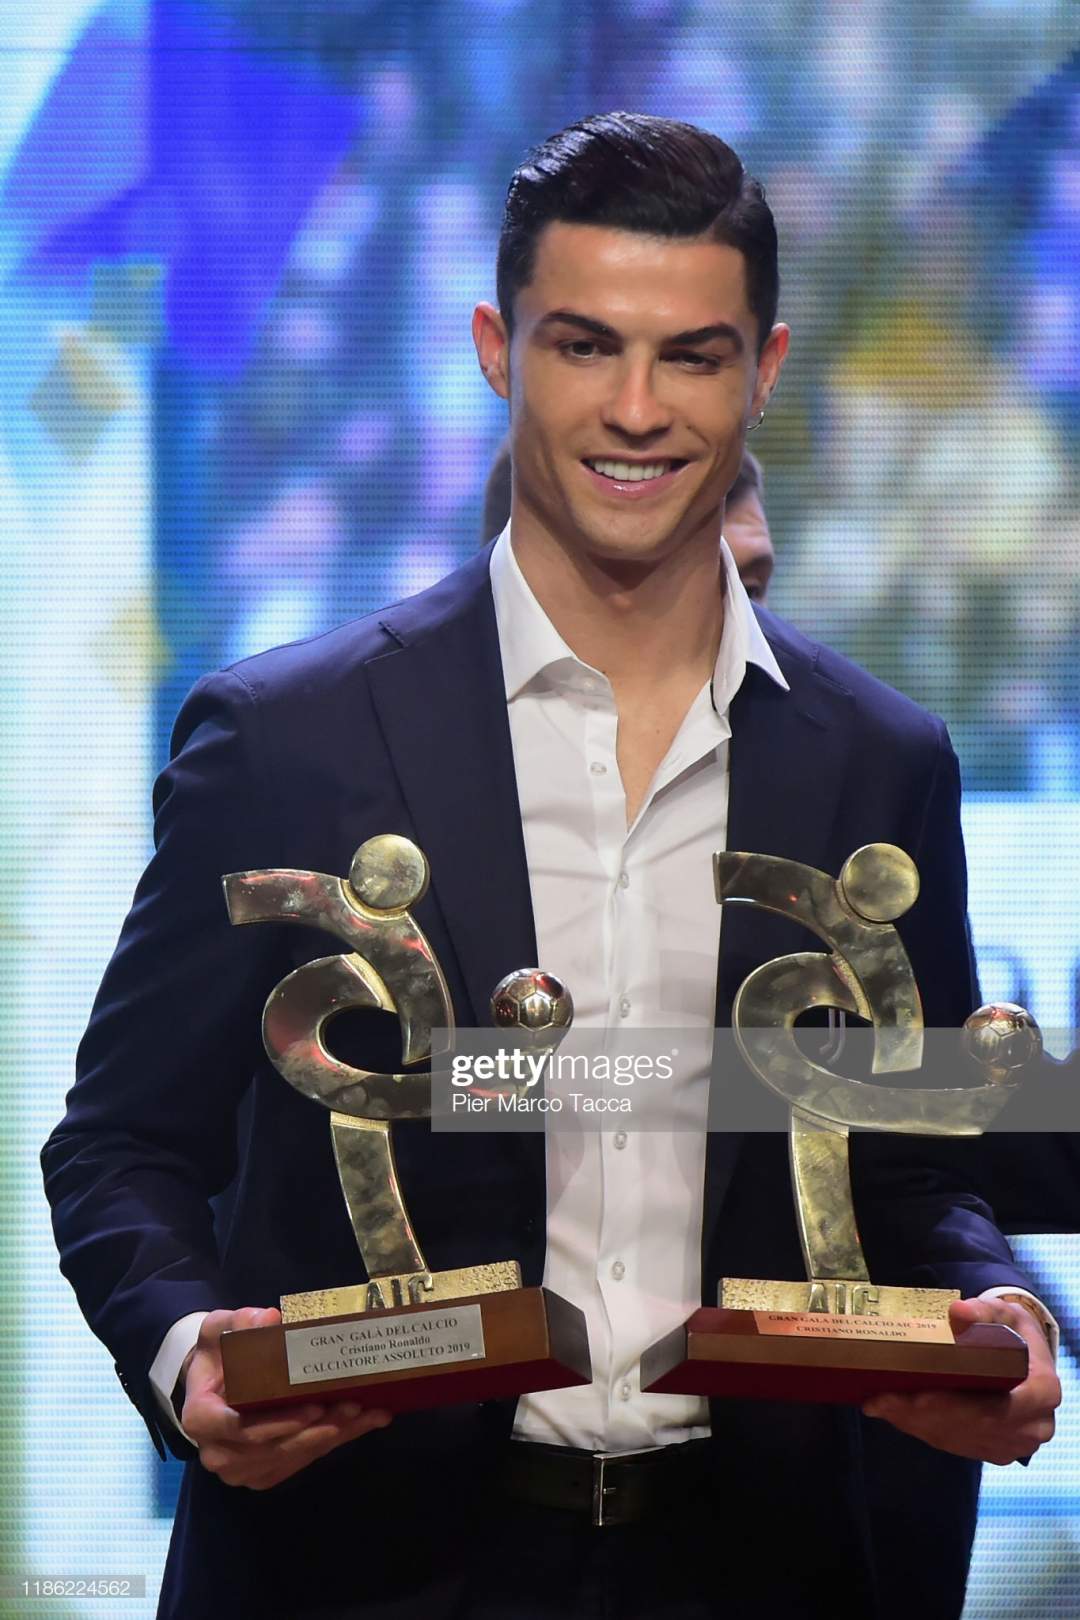 Ronaldo scoops prestigious award same night Messi beats him to win 2019 ballon d'or